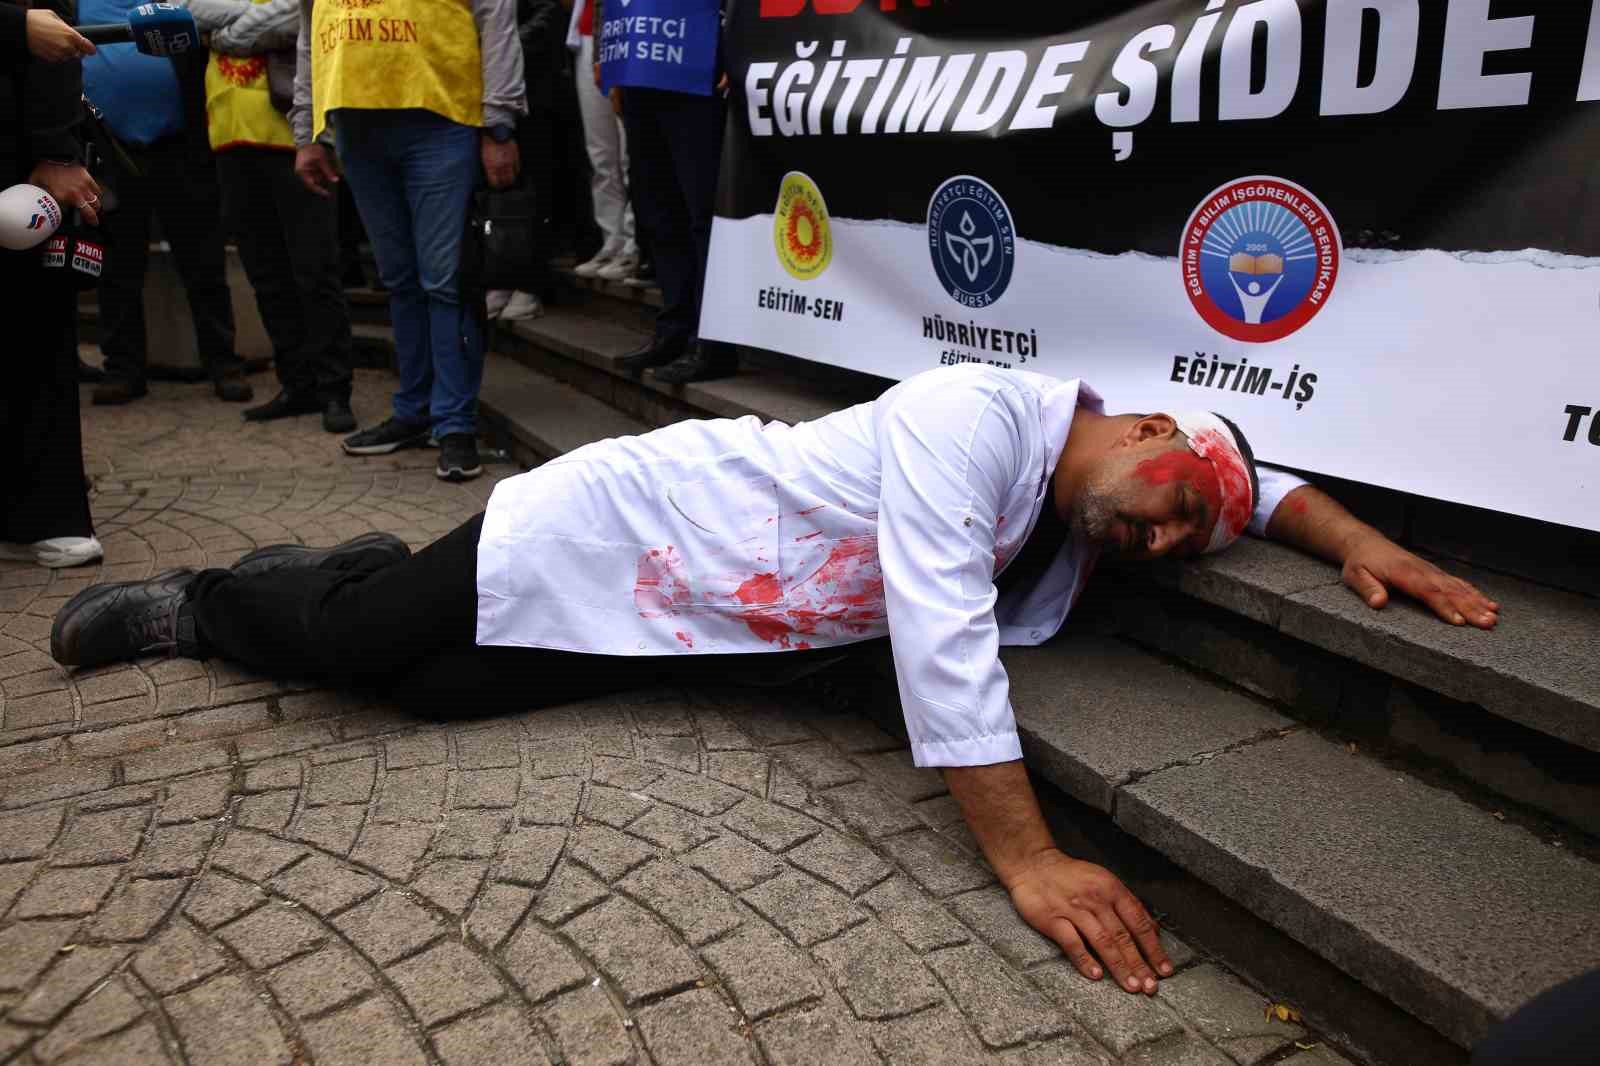 istanbulda bir ogretmenin oldurulmesi bursada protesto edildi 1